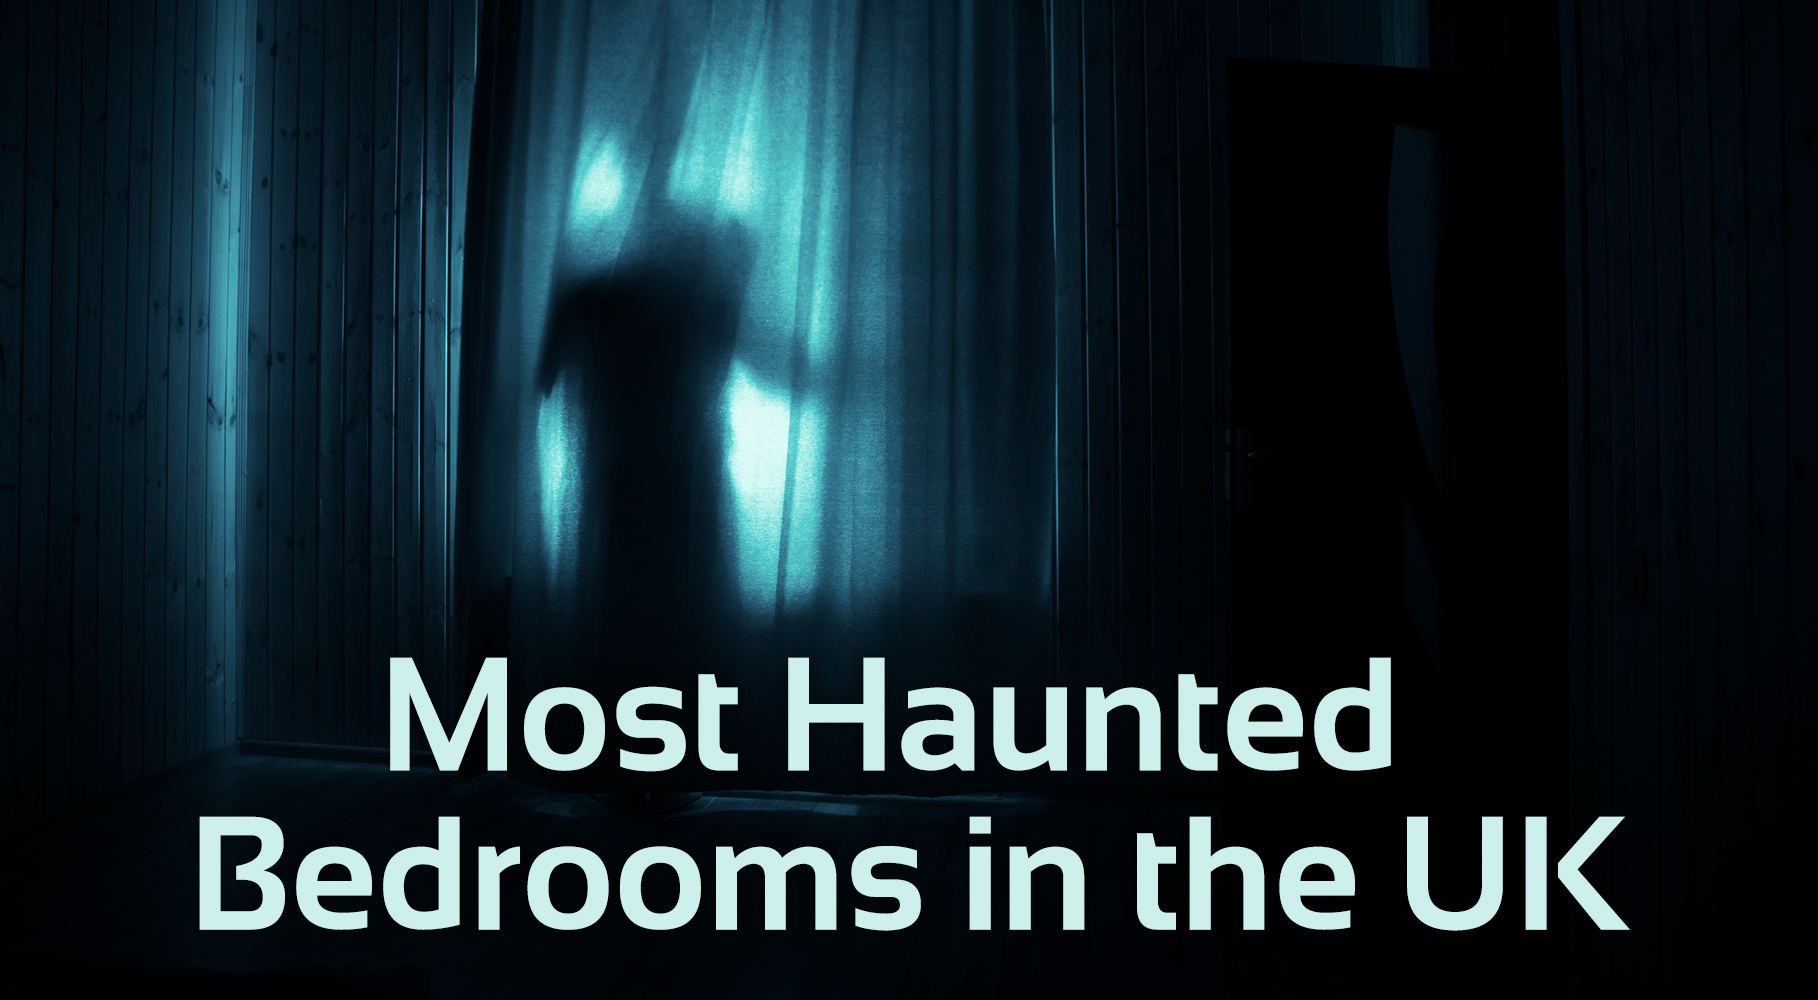 Haunted Bedrooms in the UK